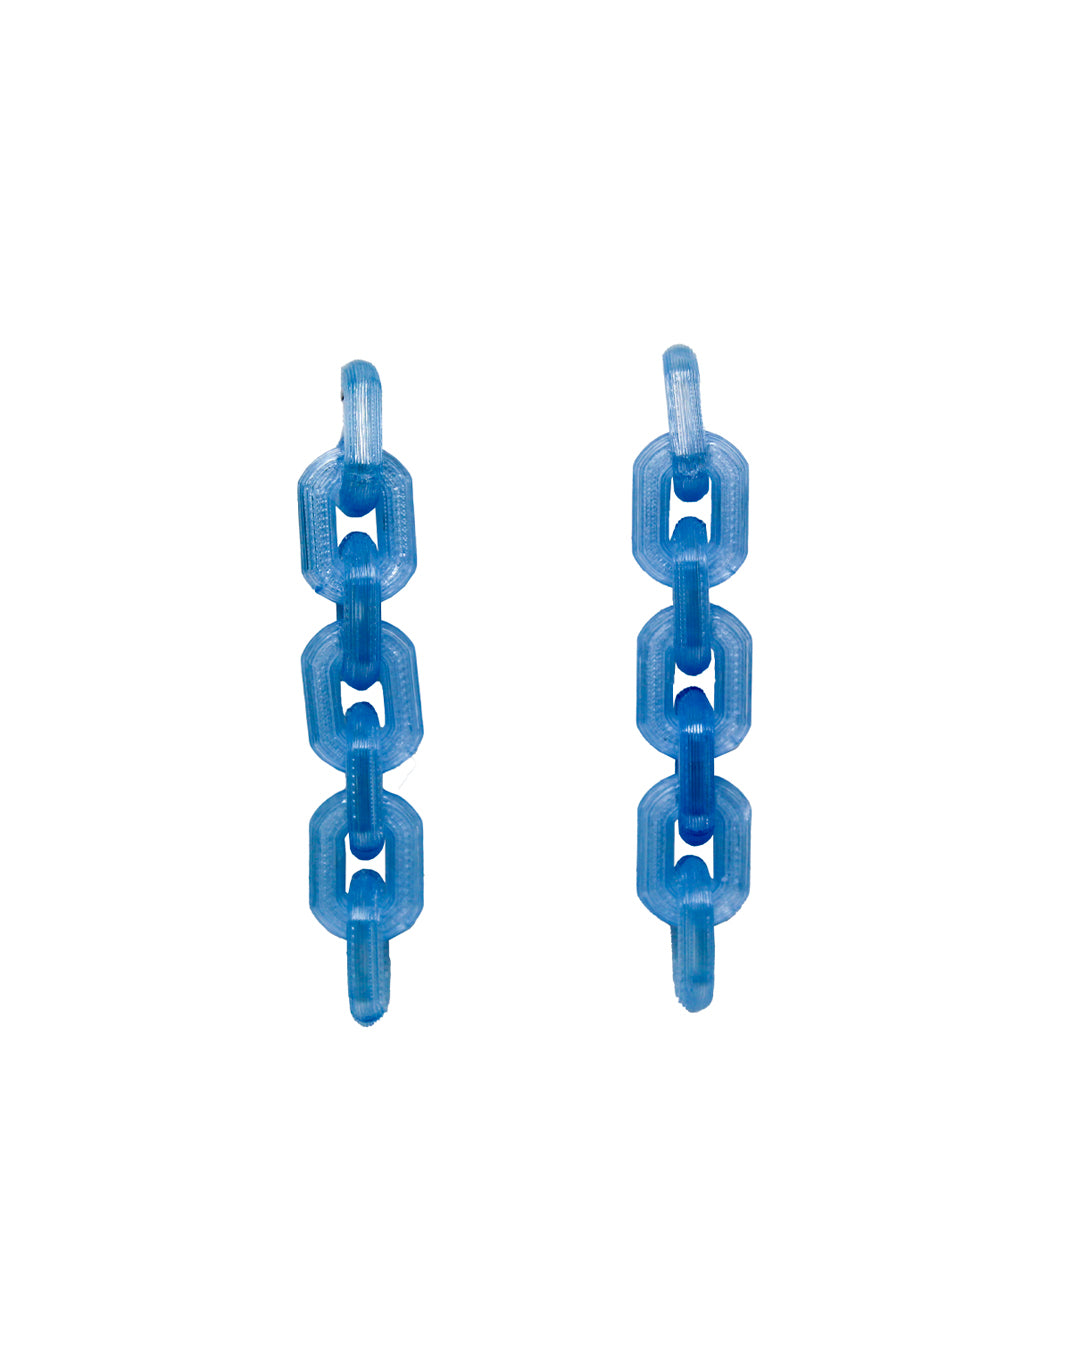 Handmade bio plastic colorful chain earrings - Rahrah